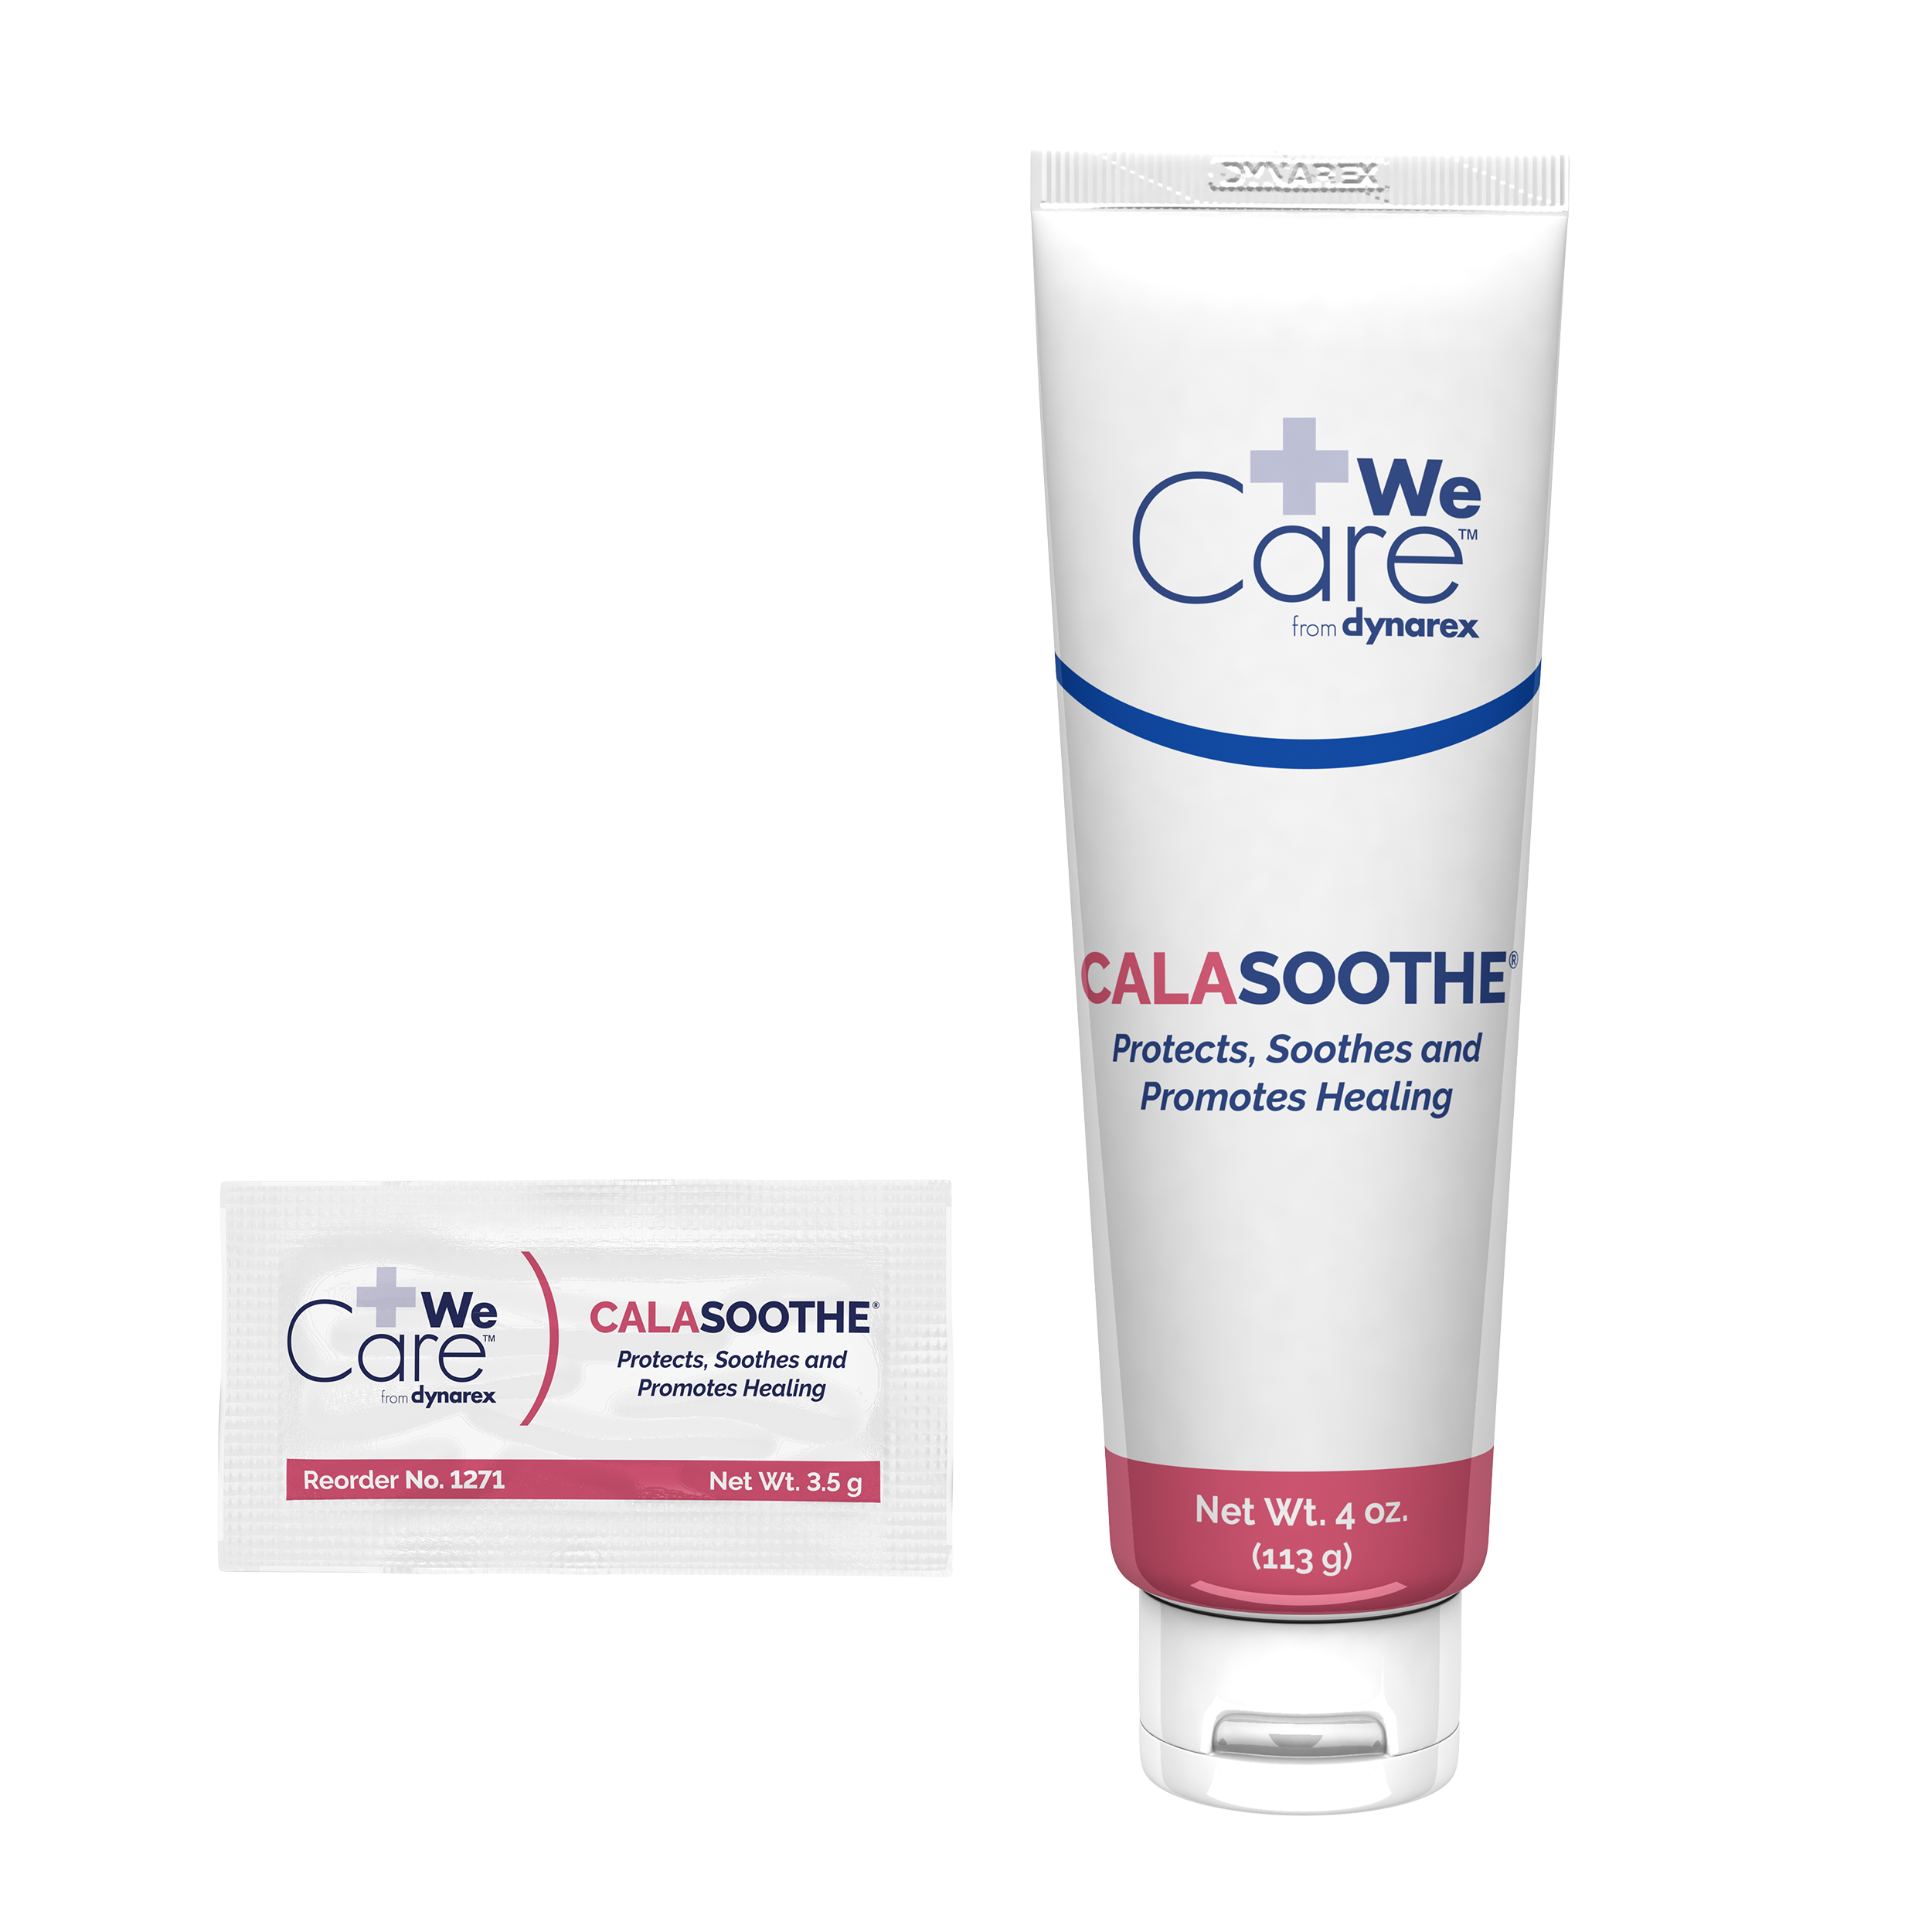 1271 Dynarex® CalaSoothe Skin Protectant Moisture Barrier Cream, 3.5 gram packet
